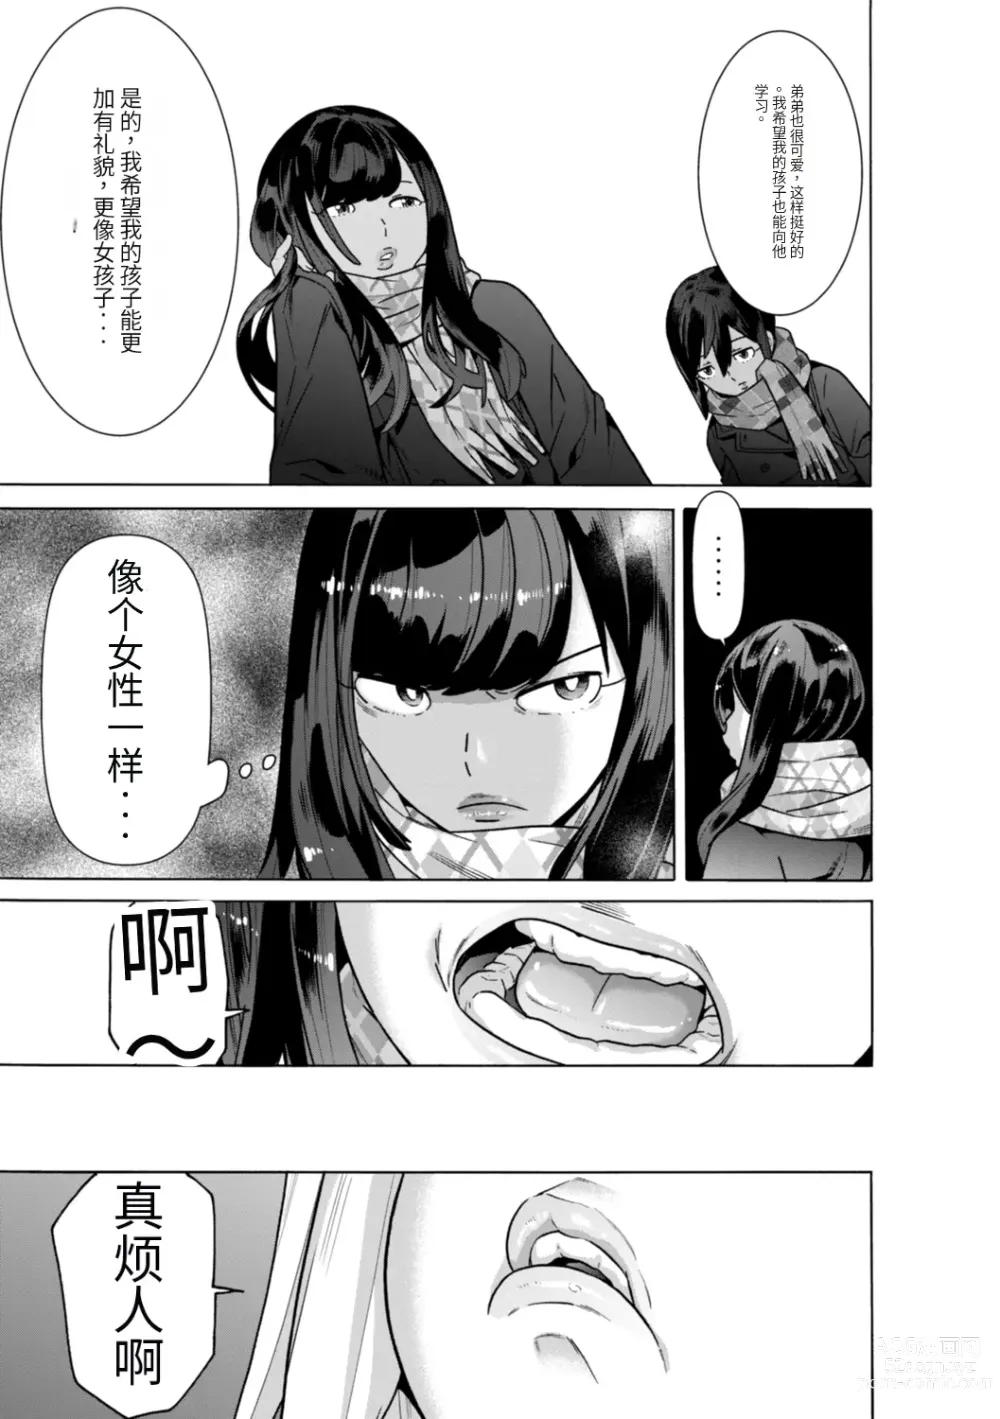 Page 9 of manga Aru Sekai no...